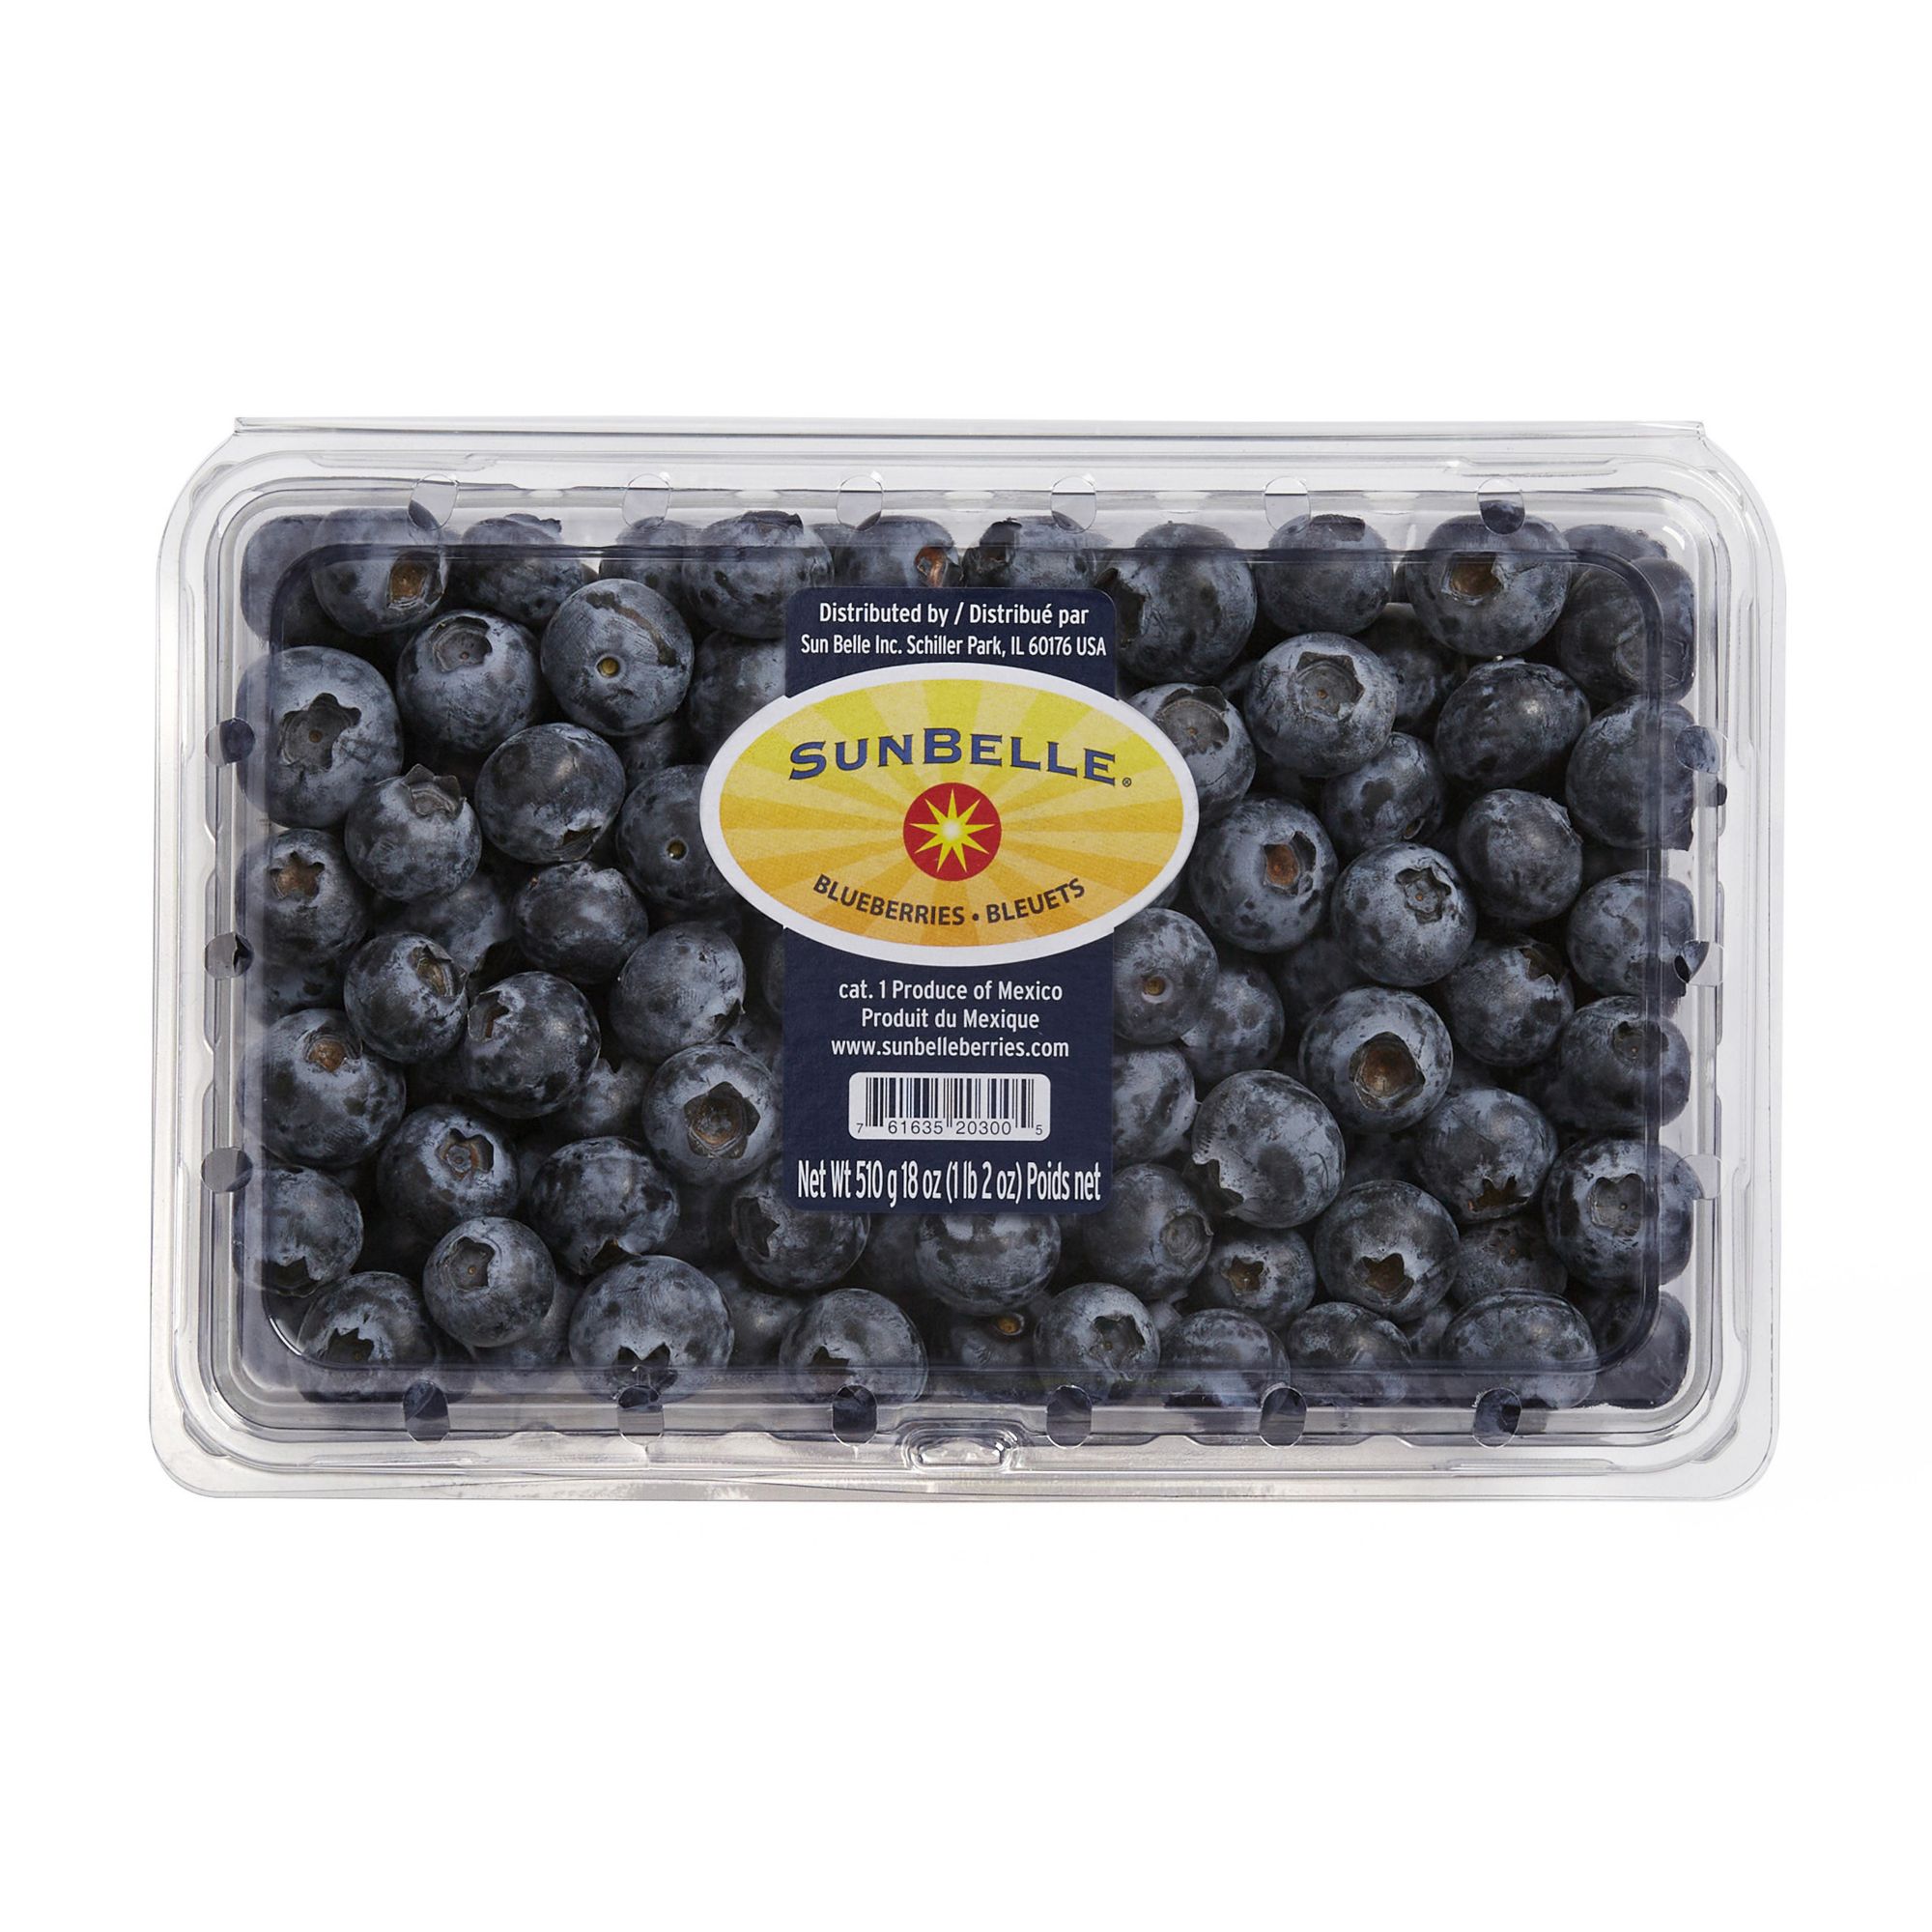 Case – Organic Granny Smith Apples – 38 lb – Farm Fresh Carolinas